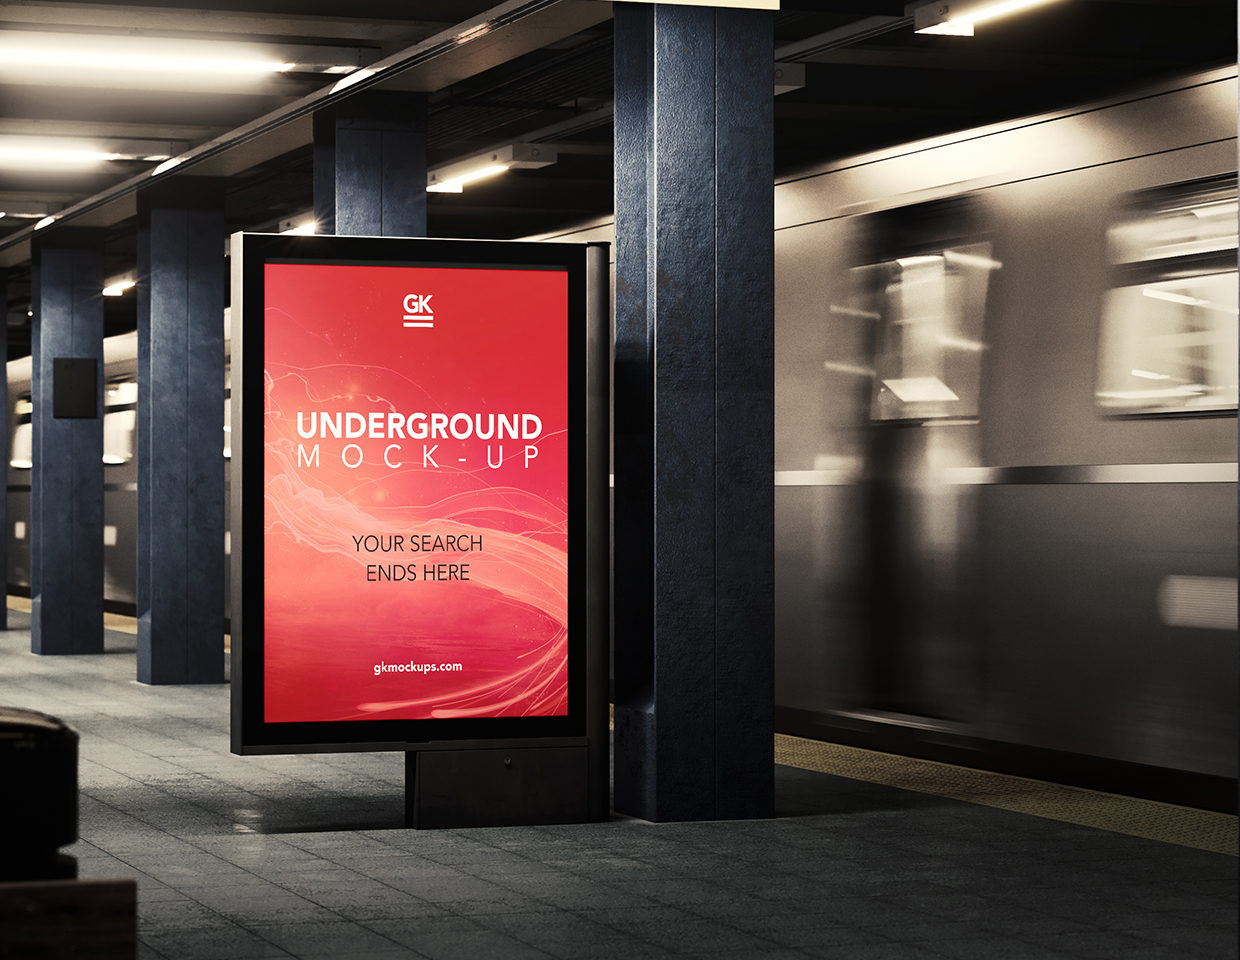 3D Underground / Subway Mock-up